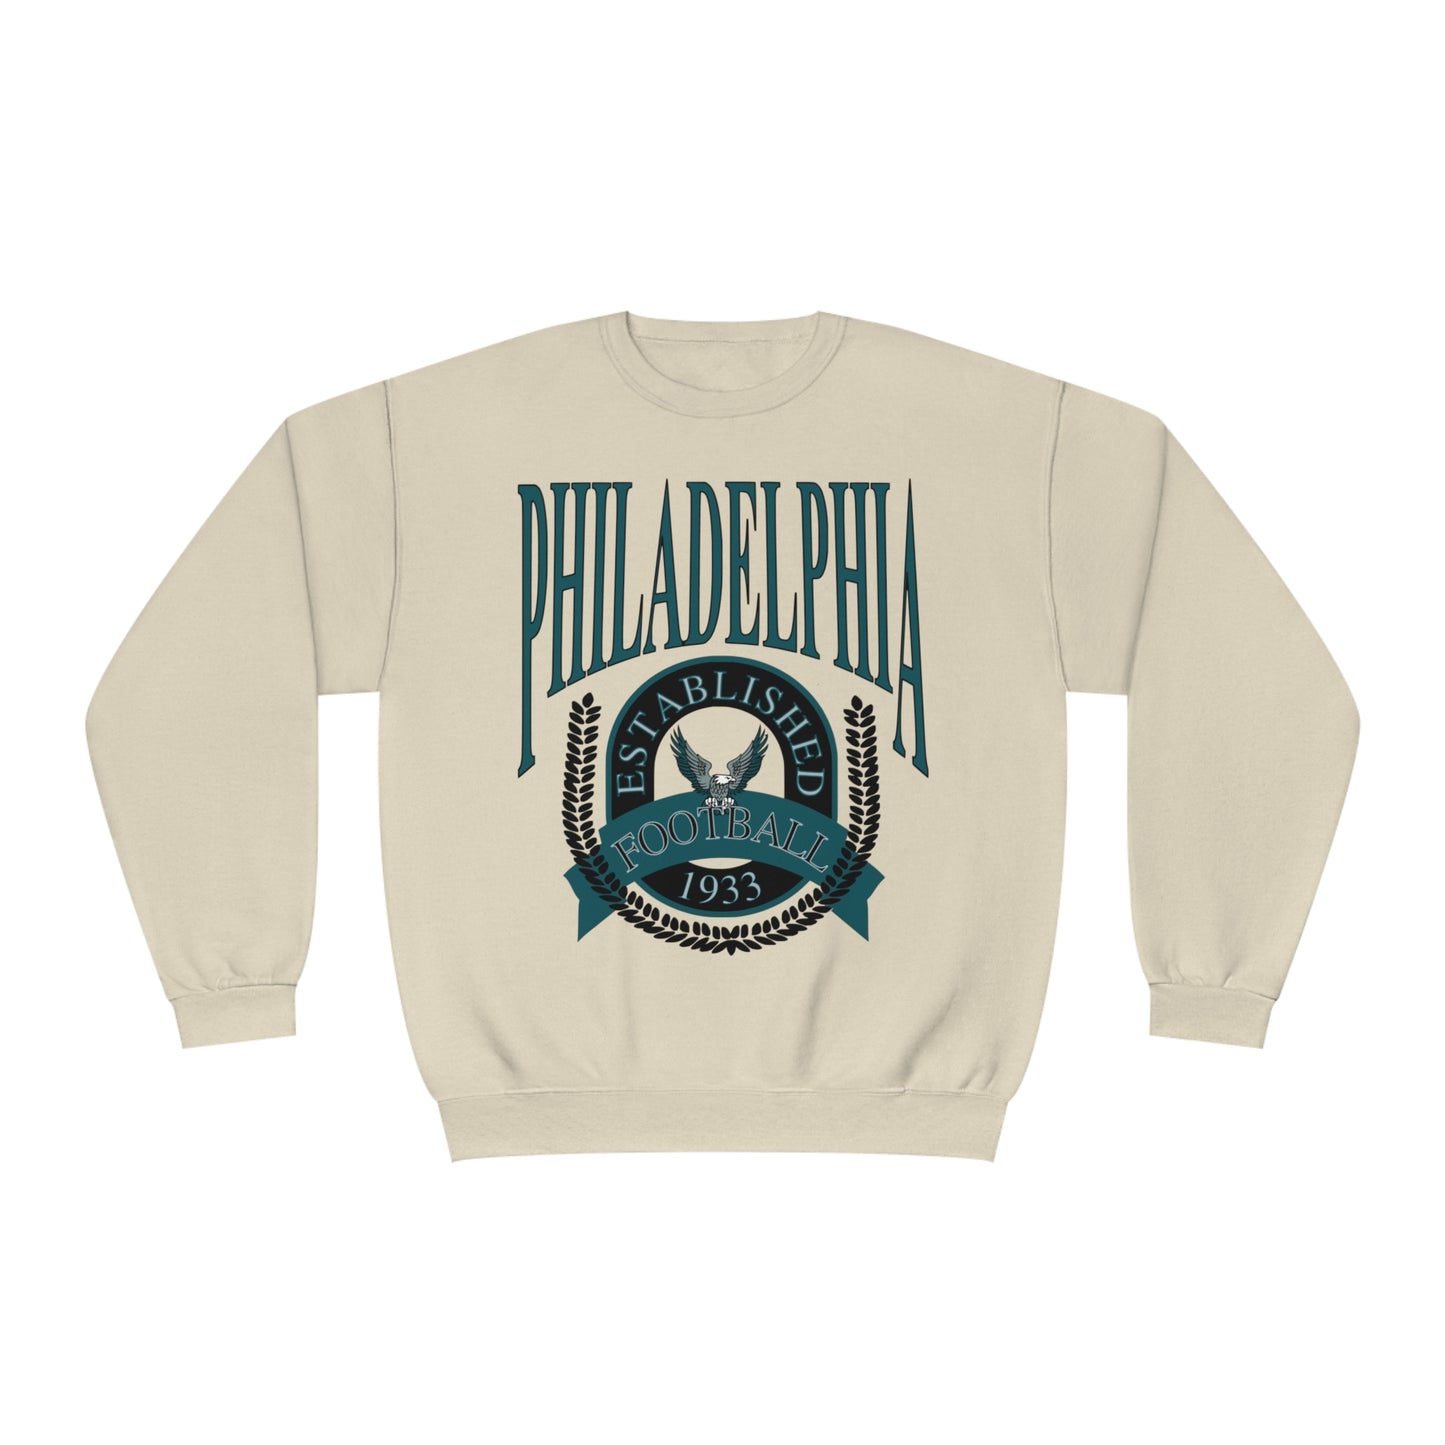 Teal Retro Throwback Philadelphia Eagles Crewneck - Retro Unisex Football Sweatshirt - Men's & Women's 90's Oversized Hoodie - Design 1